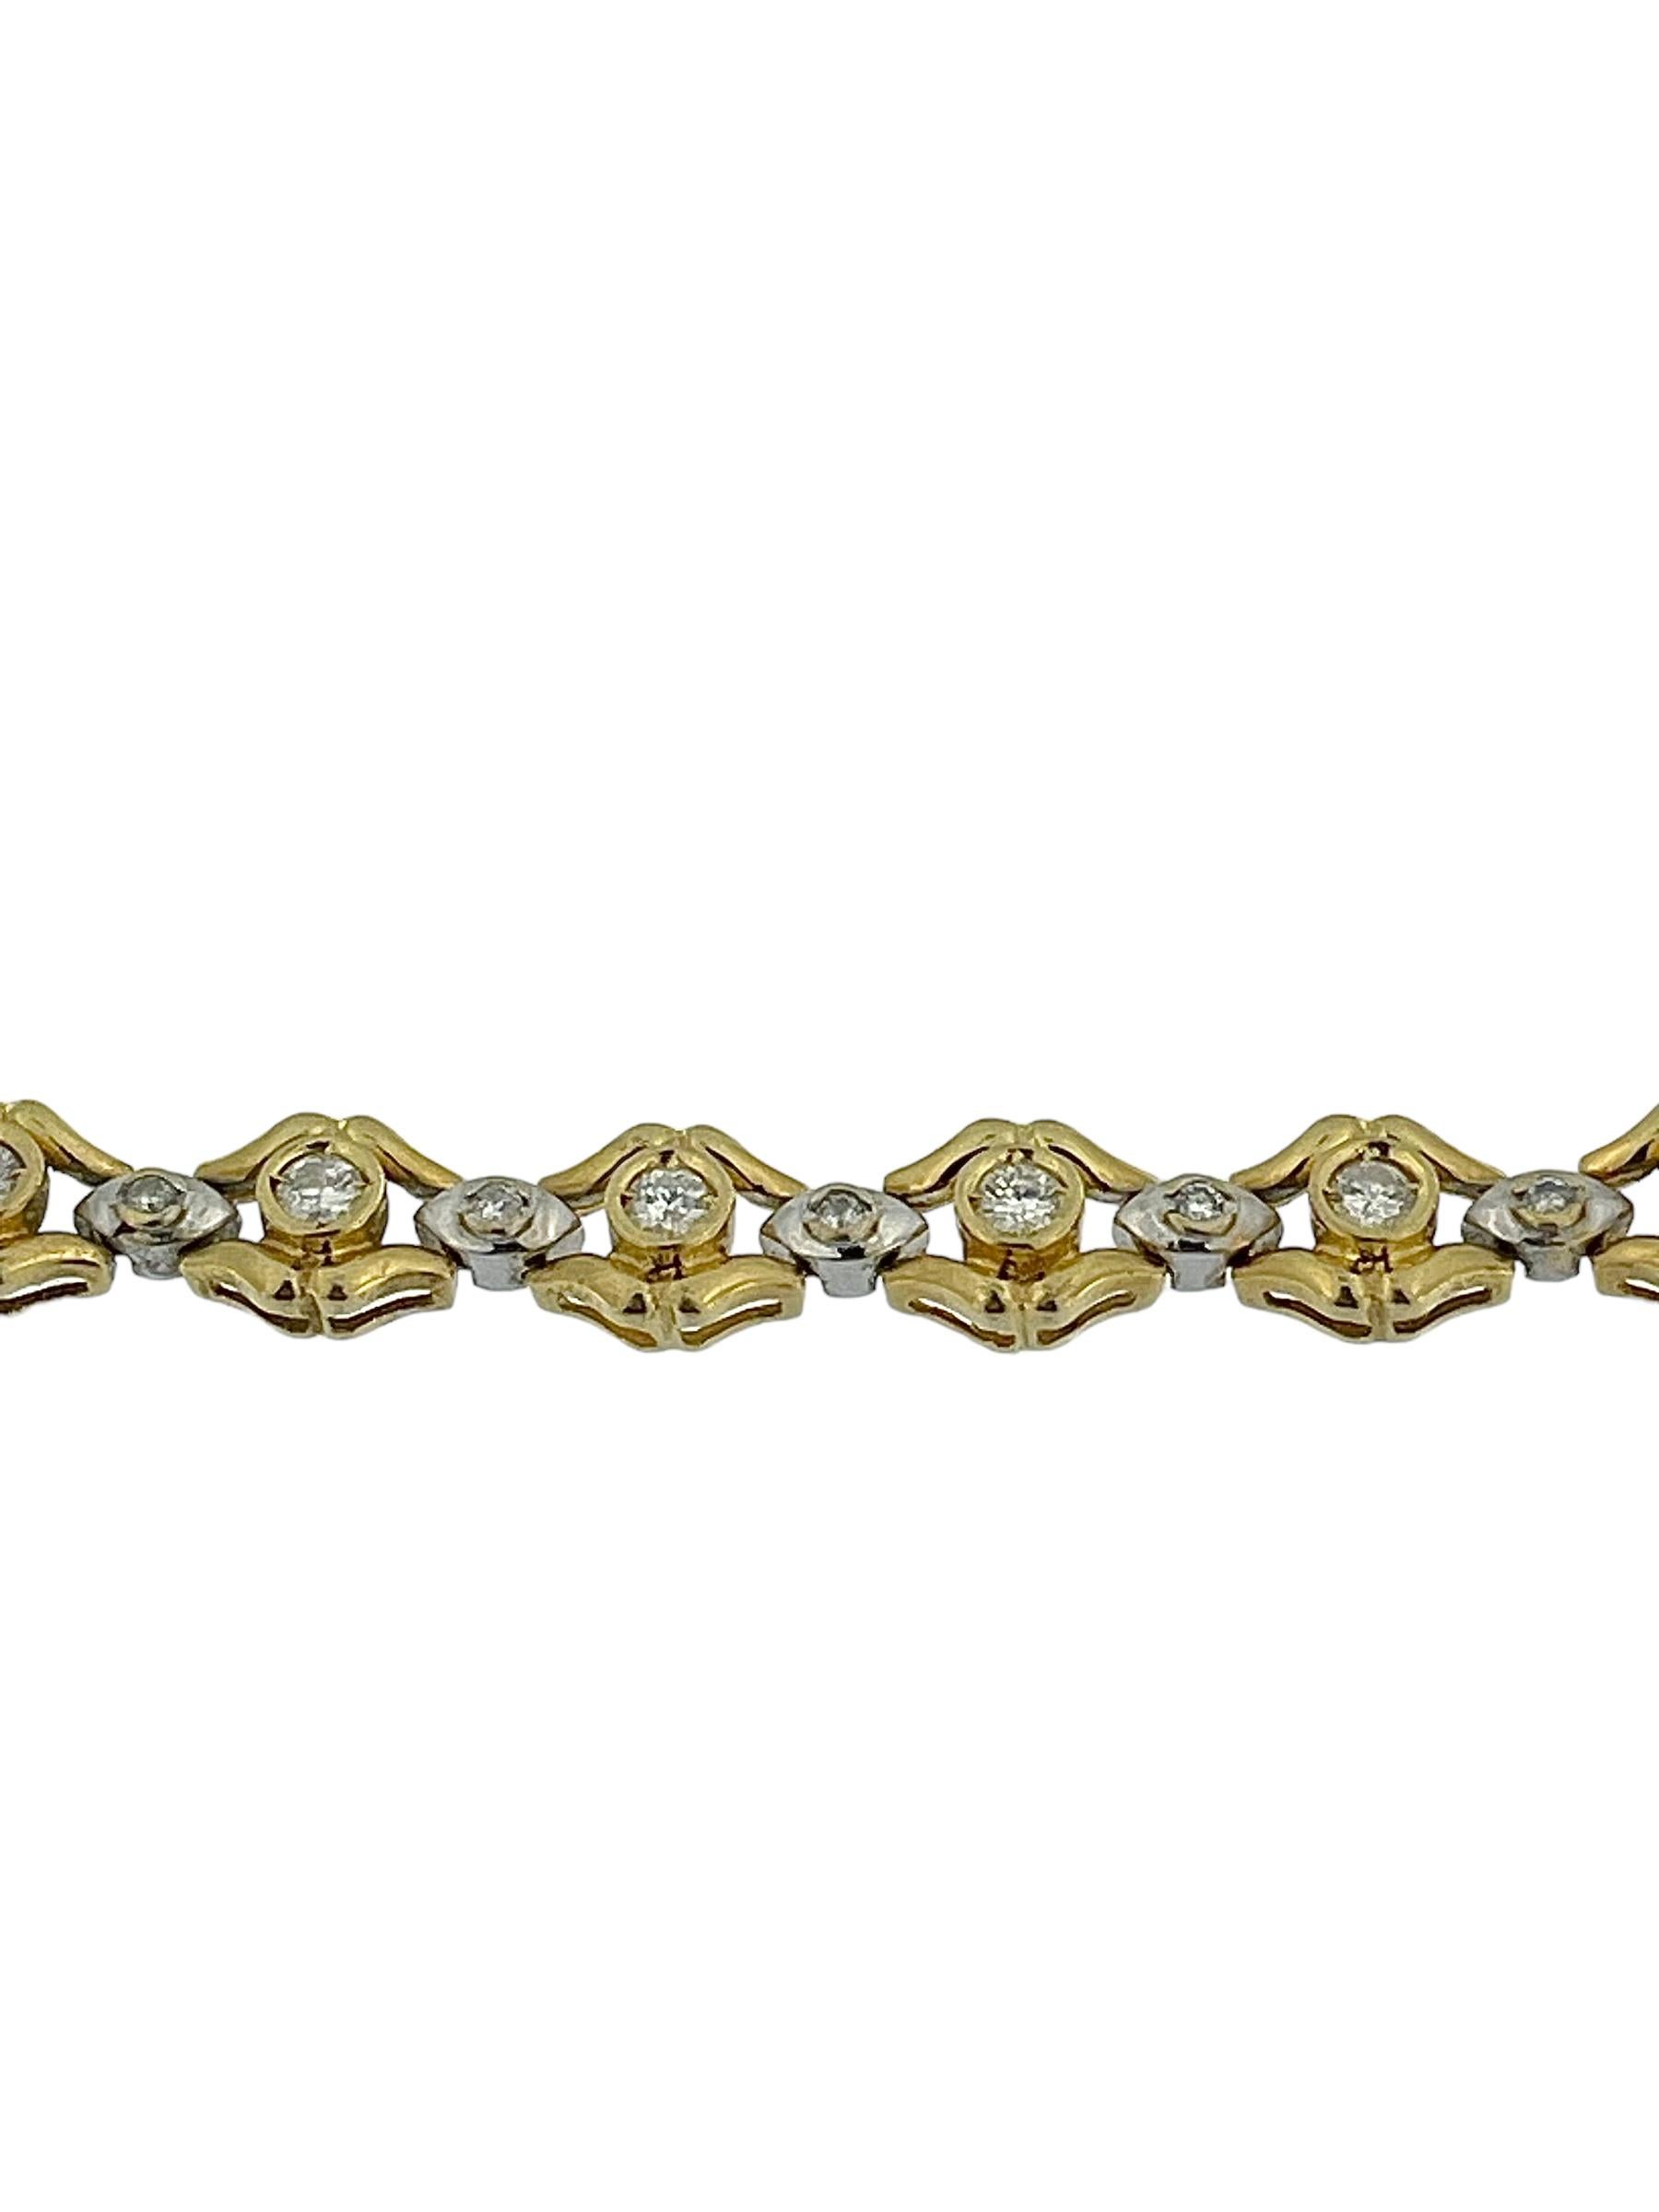 Women's or Men's Retro Gold Bracelet with Diamonds HRD Certified For Sale